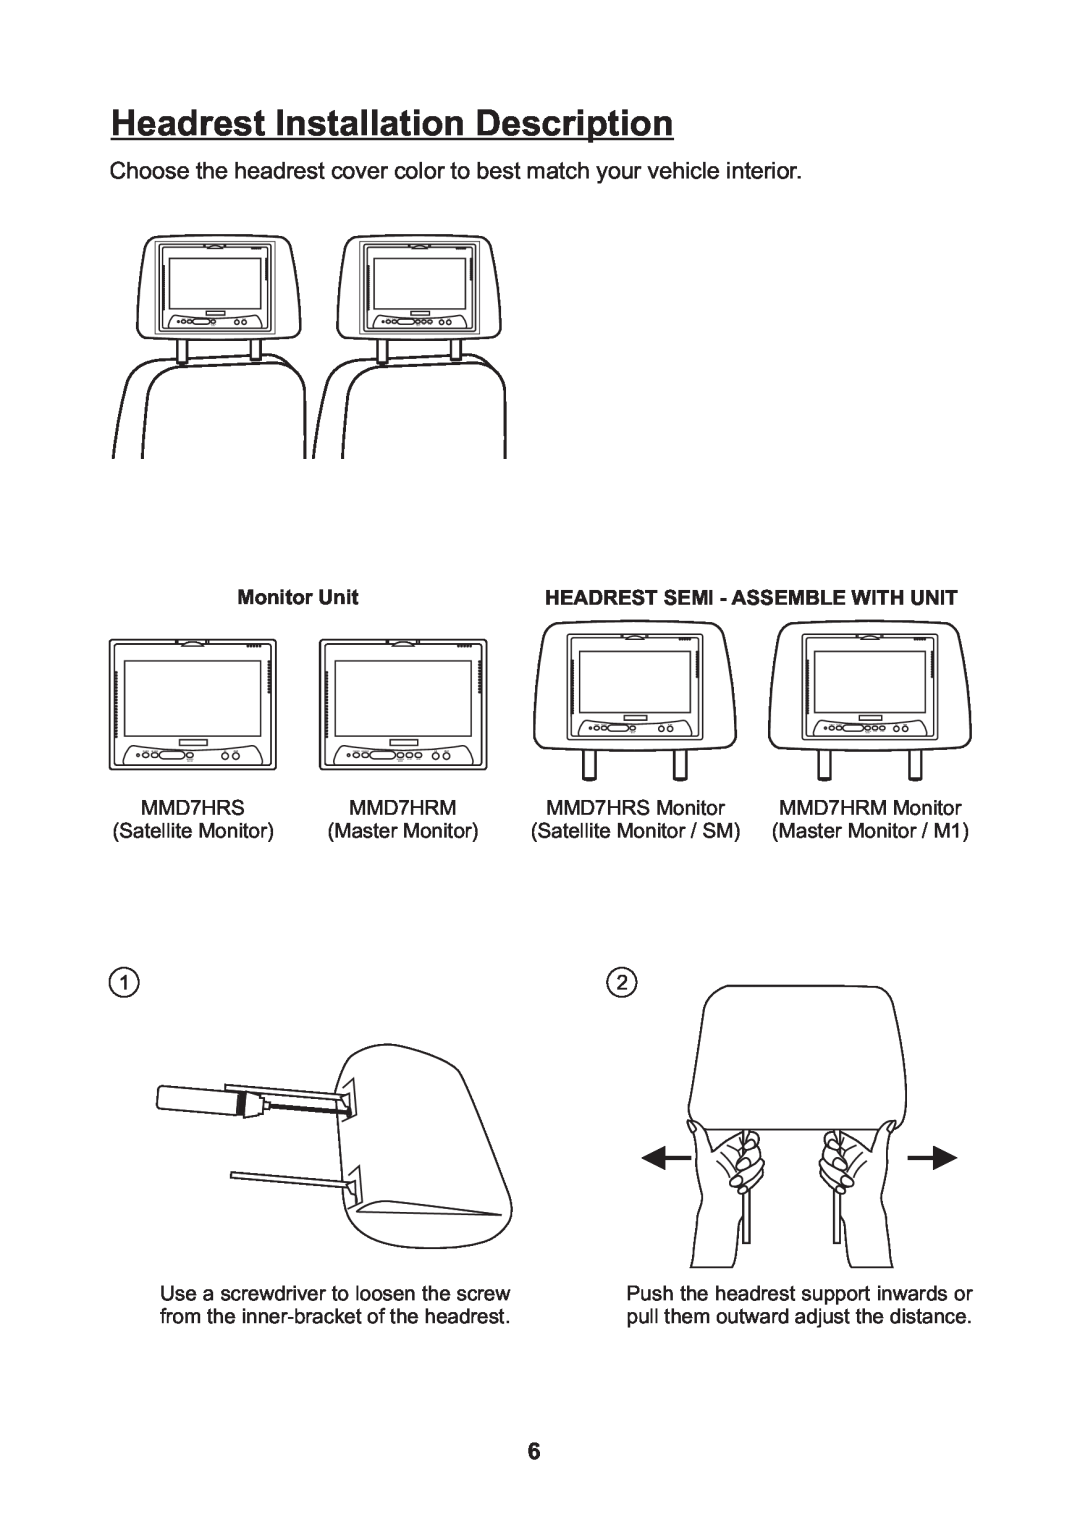 Audiovox MMD7HRB Headrest Installation Description, Monitor Unit, Headrest Semi - Assemble With Unit, MMD7HRS, MMD7HRM 